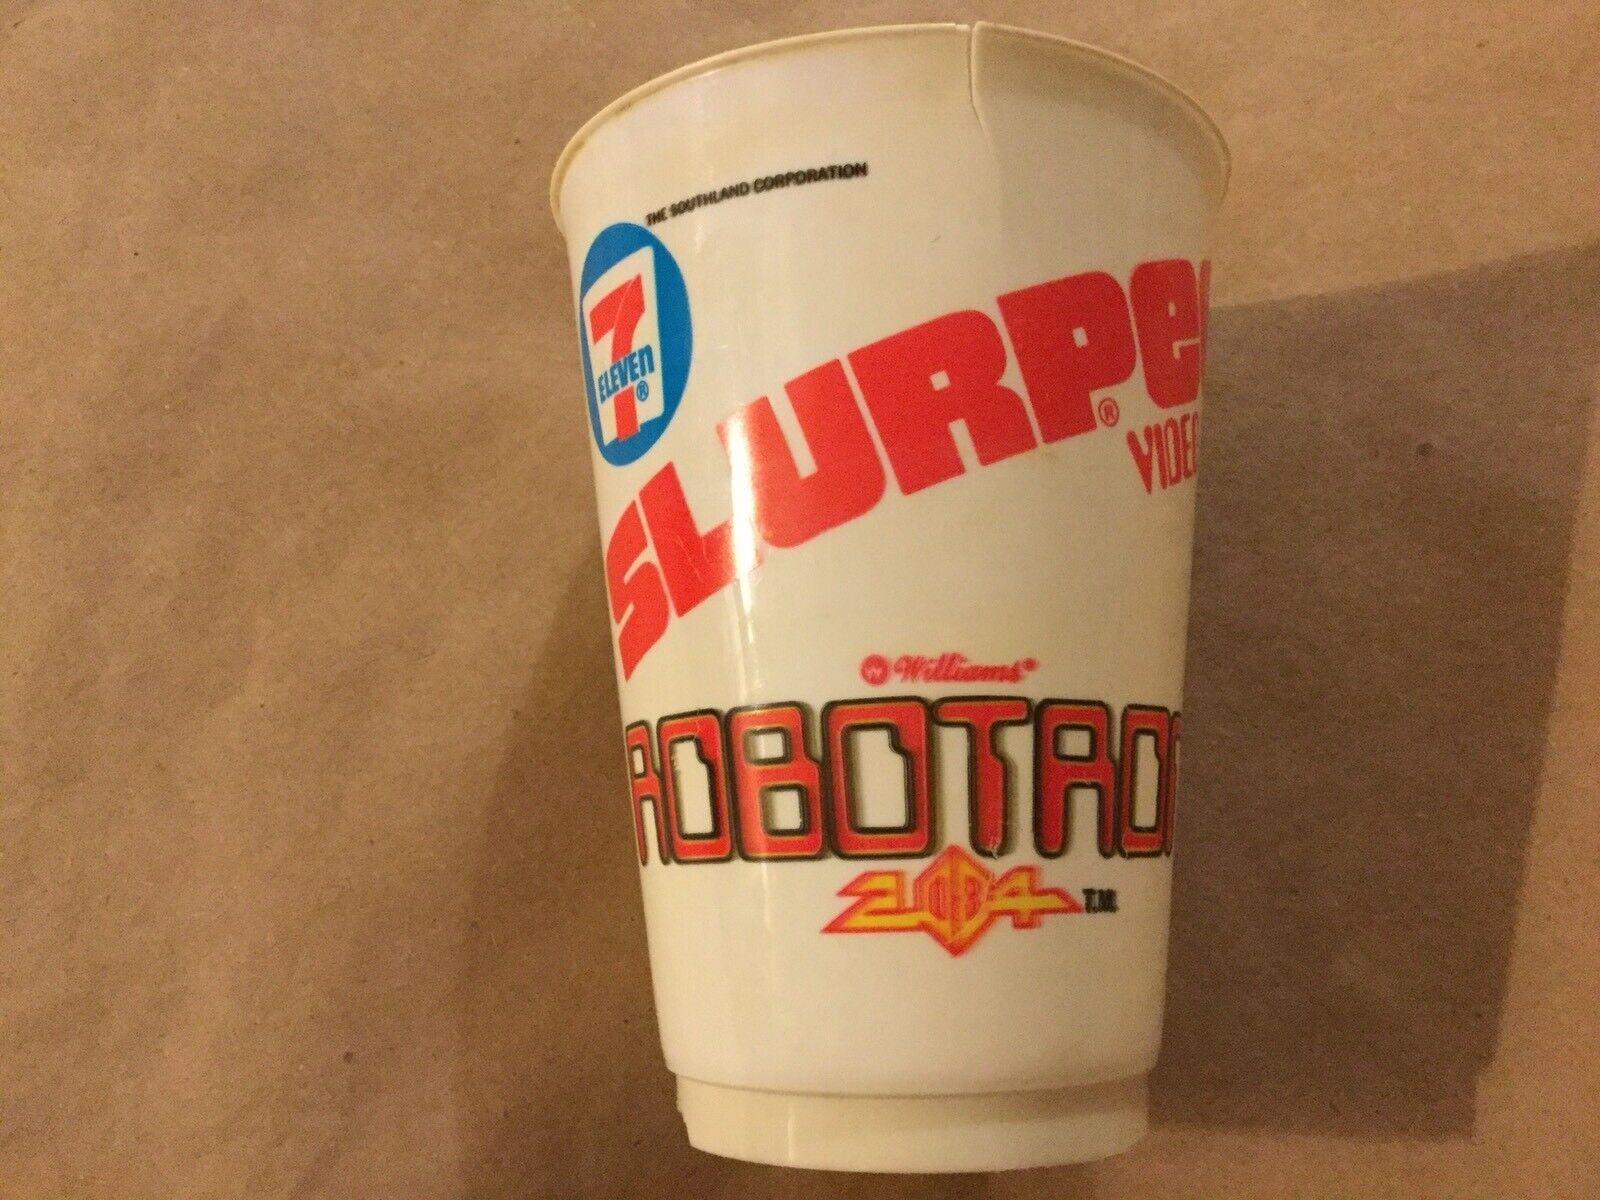 Vintage Small Damaged Plastic Slurpee Robotron 2084 Cup, 7-11 Video Game 1982